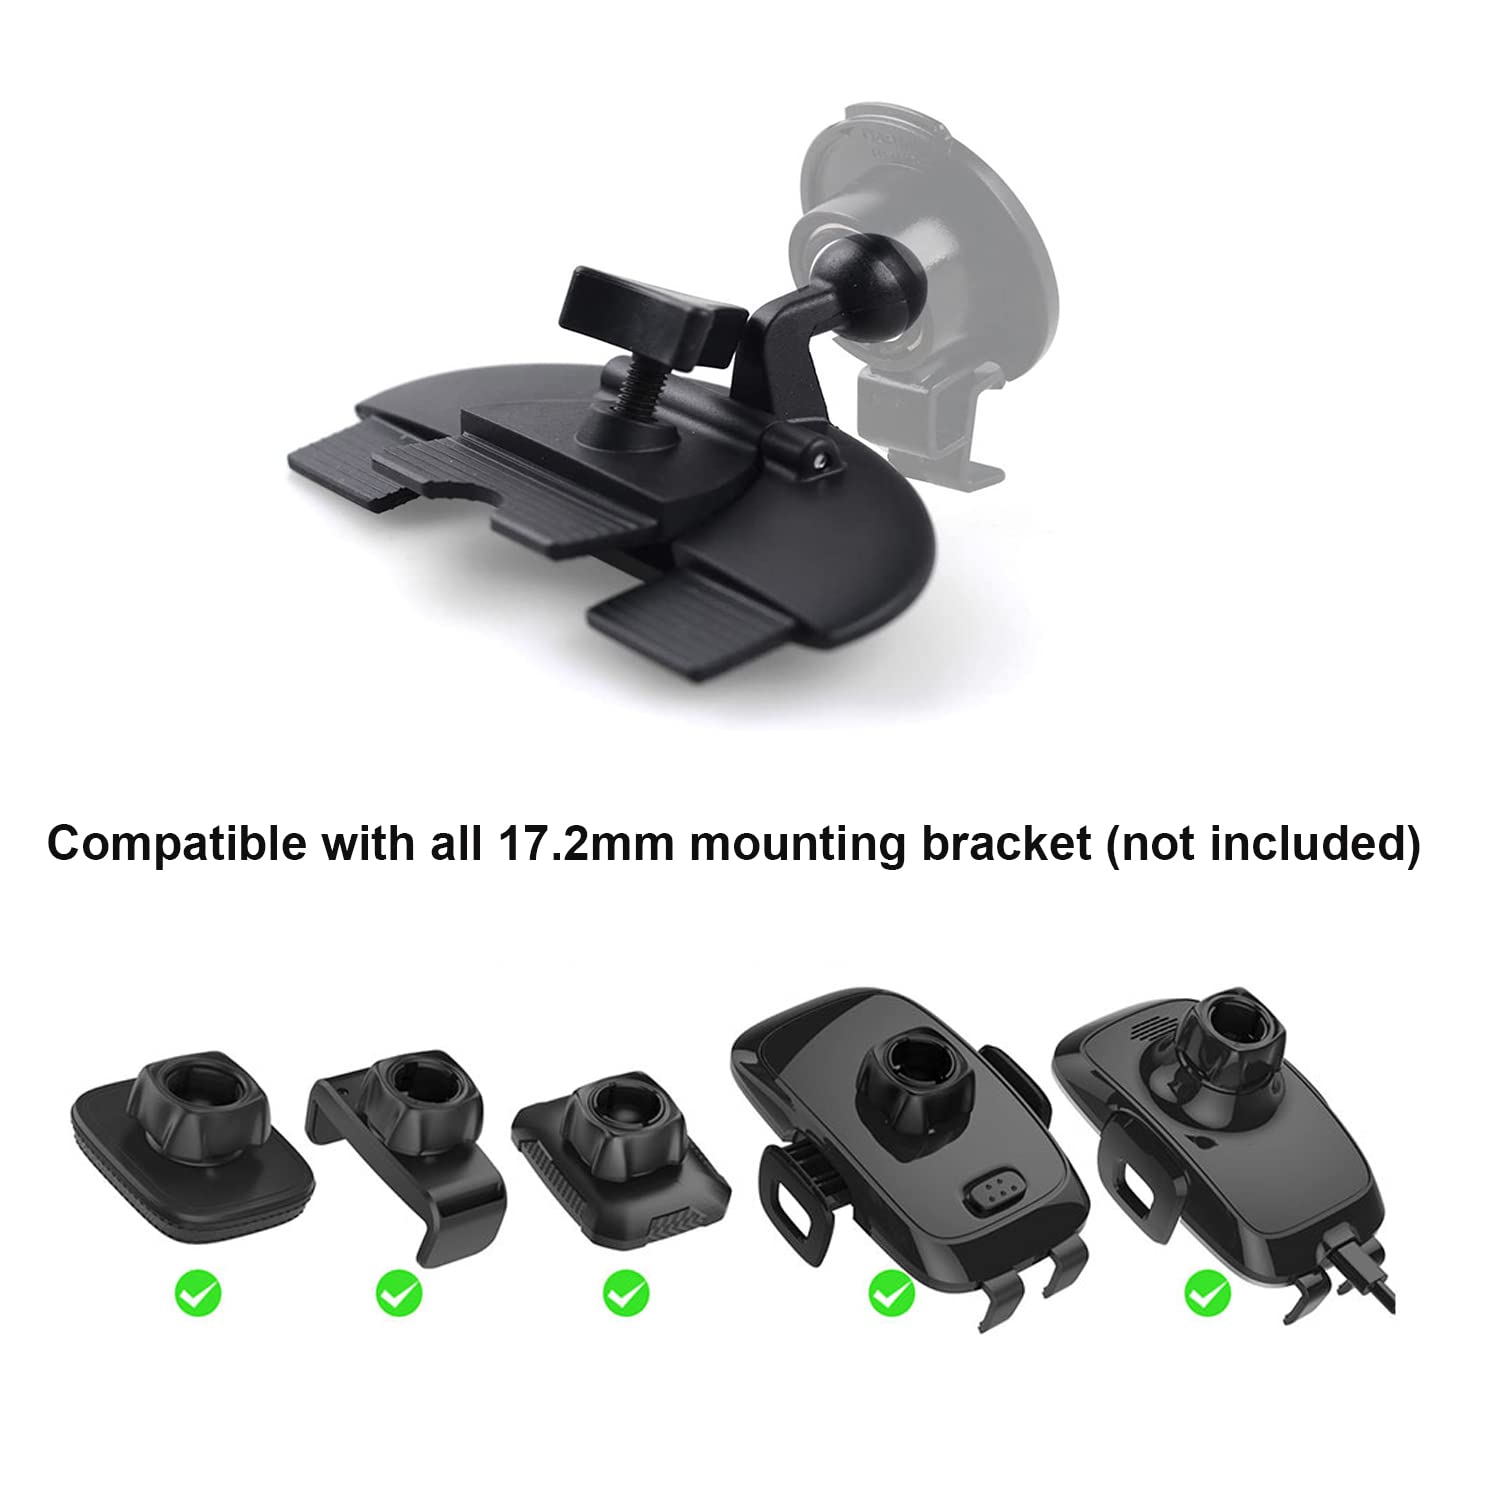 ICARMOUNT Replacement CD Slot Mount Base Car Phone Holder Part, 17.2mm Ball Joint CD Slot for Phone Mount Holder, Magnetic Mount, GPS Mount